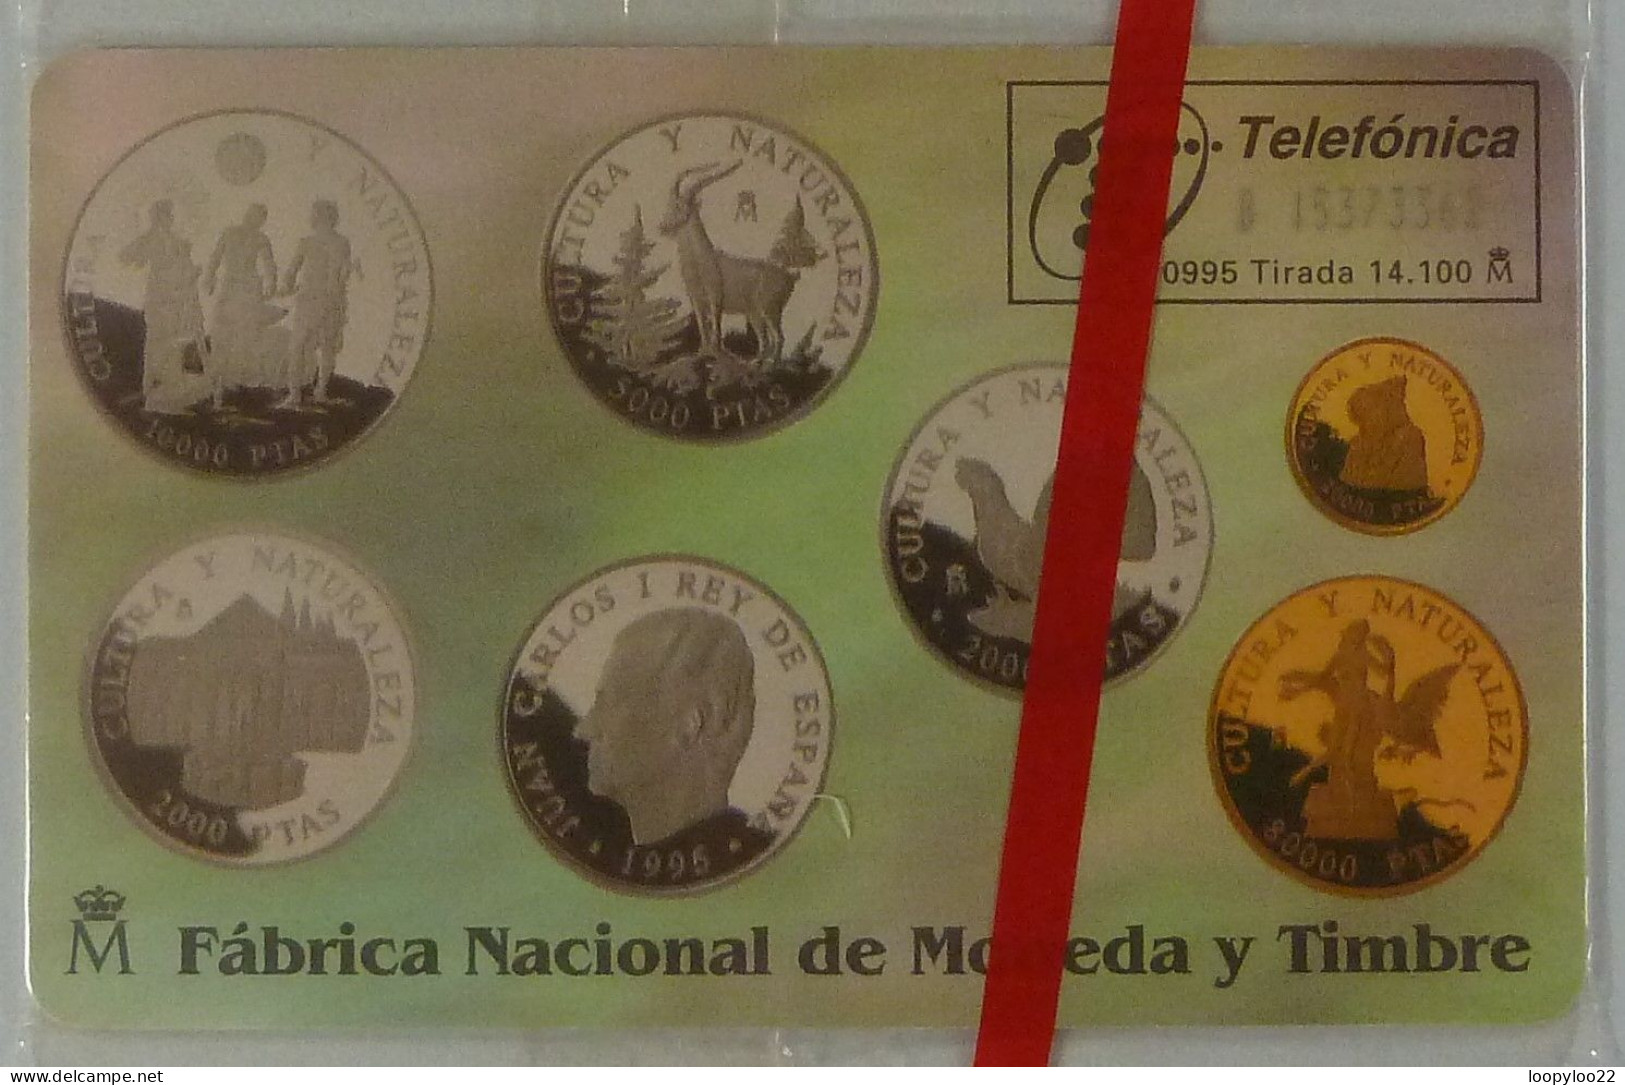 SPAIN - Chip - 100 Units - P-151 - Monedas Conmemoratives II - 09/95 - 14100ex - Mint Blister - Emisiones Privadas